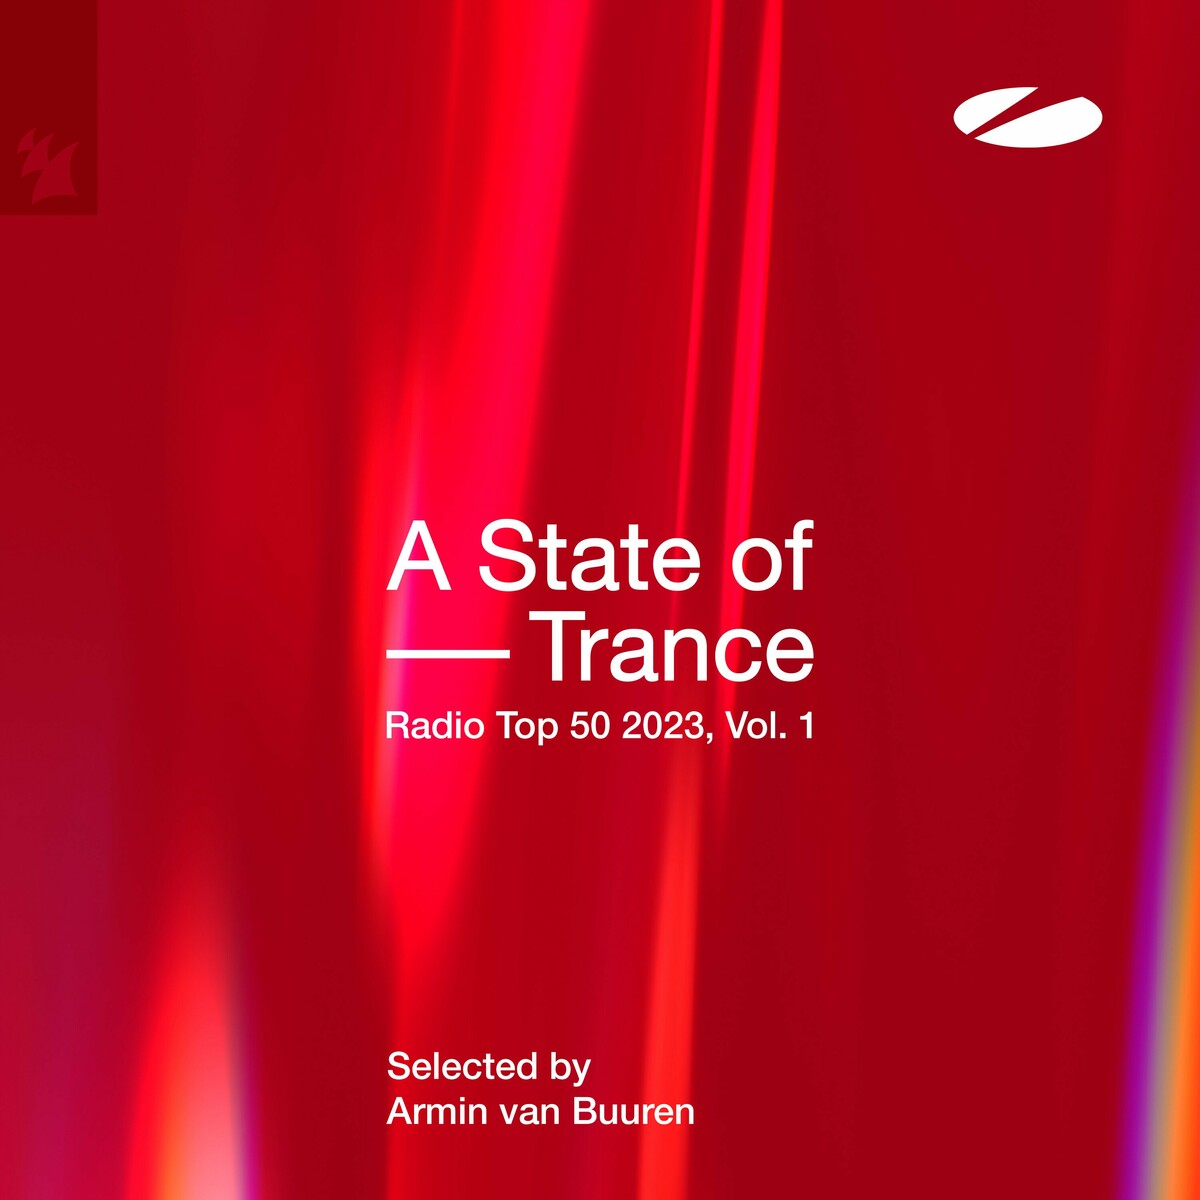 VA - A State of Trance Radio Top 50 - 2023, Vol. 1 (Selected by Armin van Buuren)